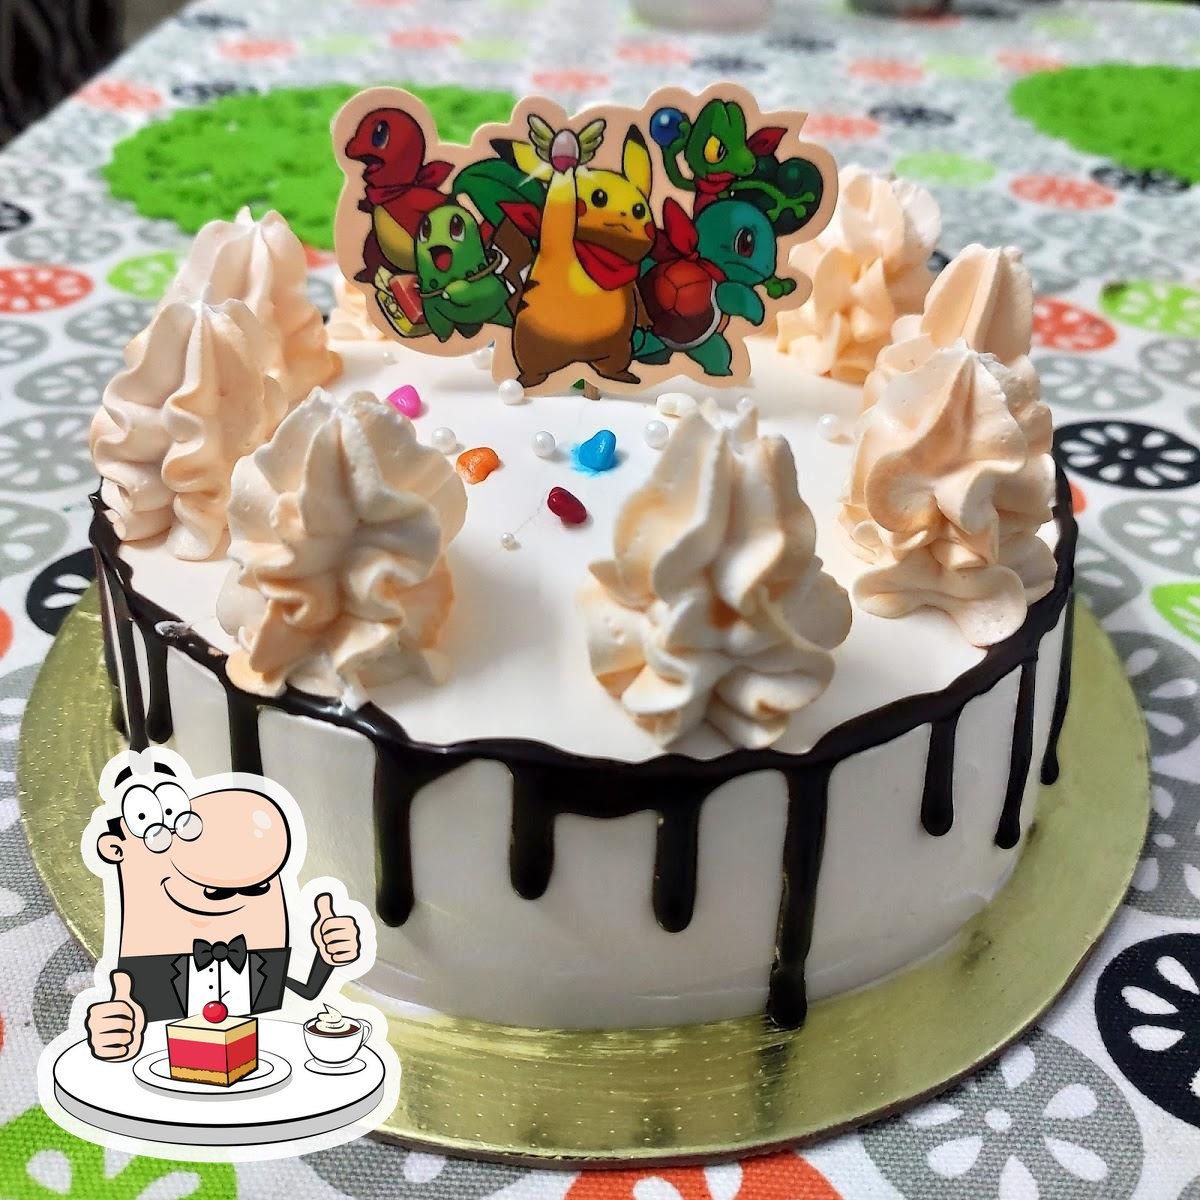 Chocolate Birthday Cake | Happy birthday cake pictures, Happy birthday cake  images, Happy birthday cakes